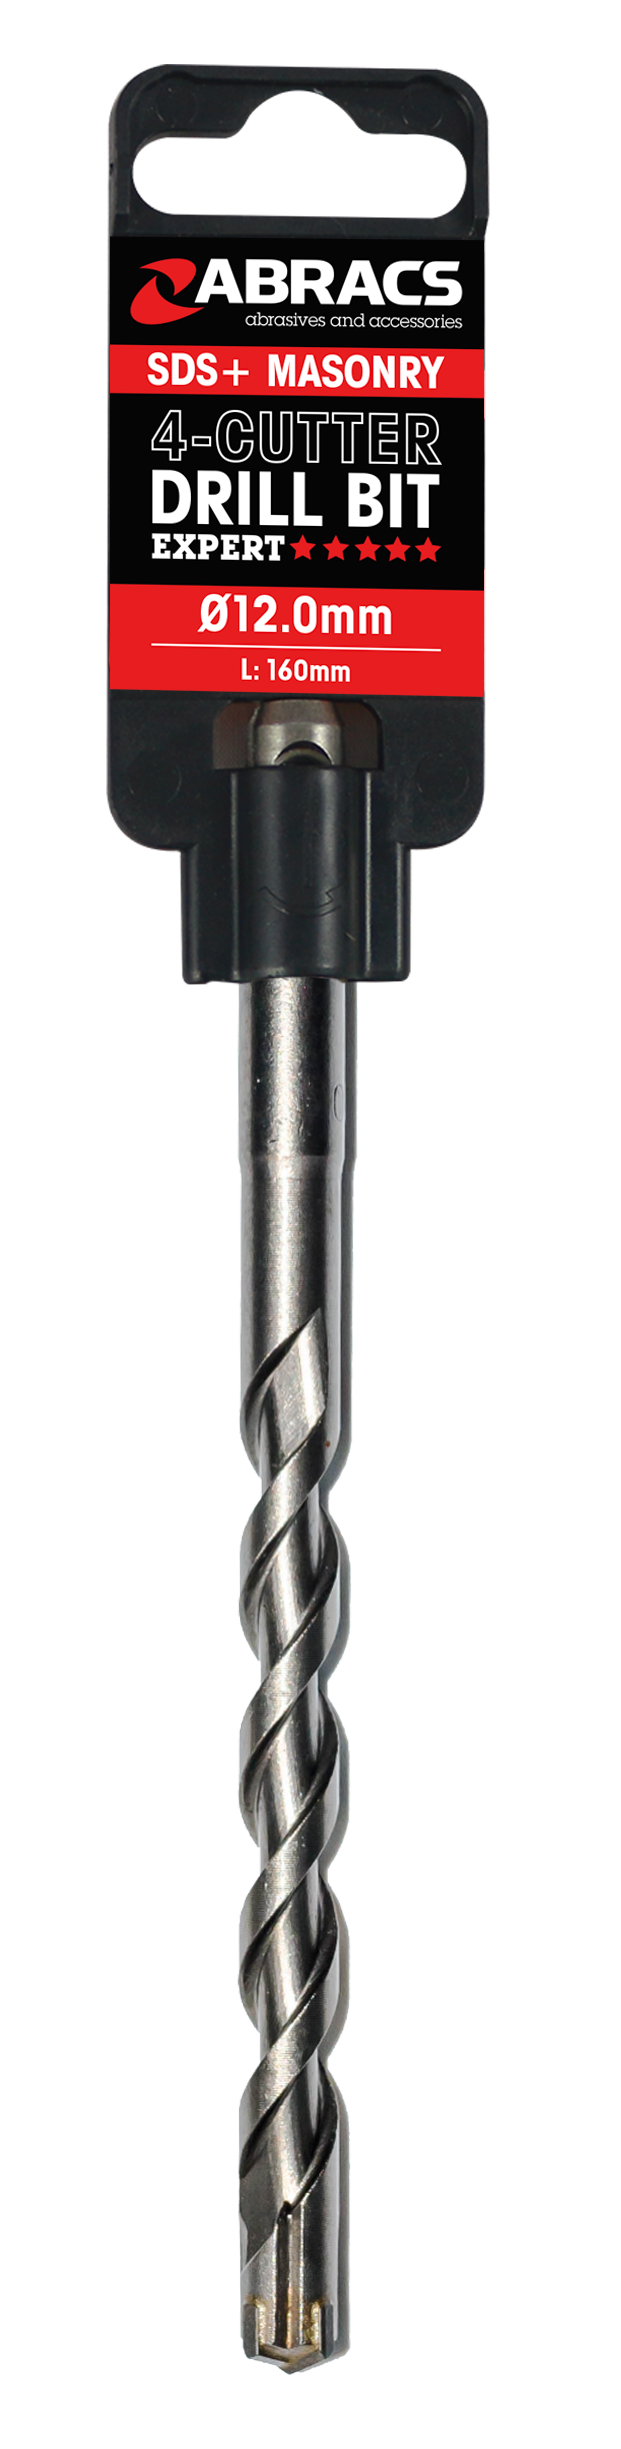 DBCX060210 6.0mm x 210mm SDS+ Masonry Drill Bit - 4 Cutter